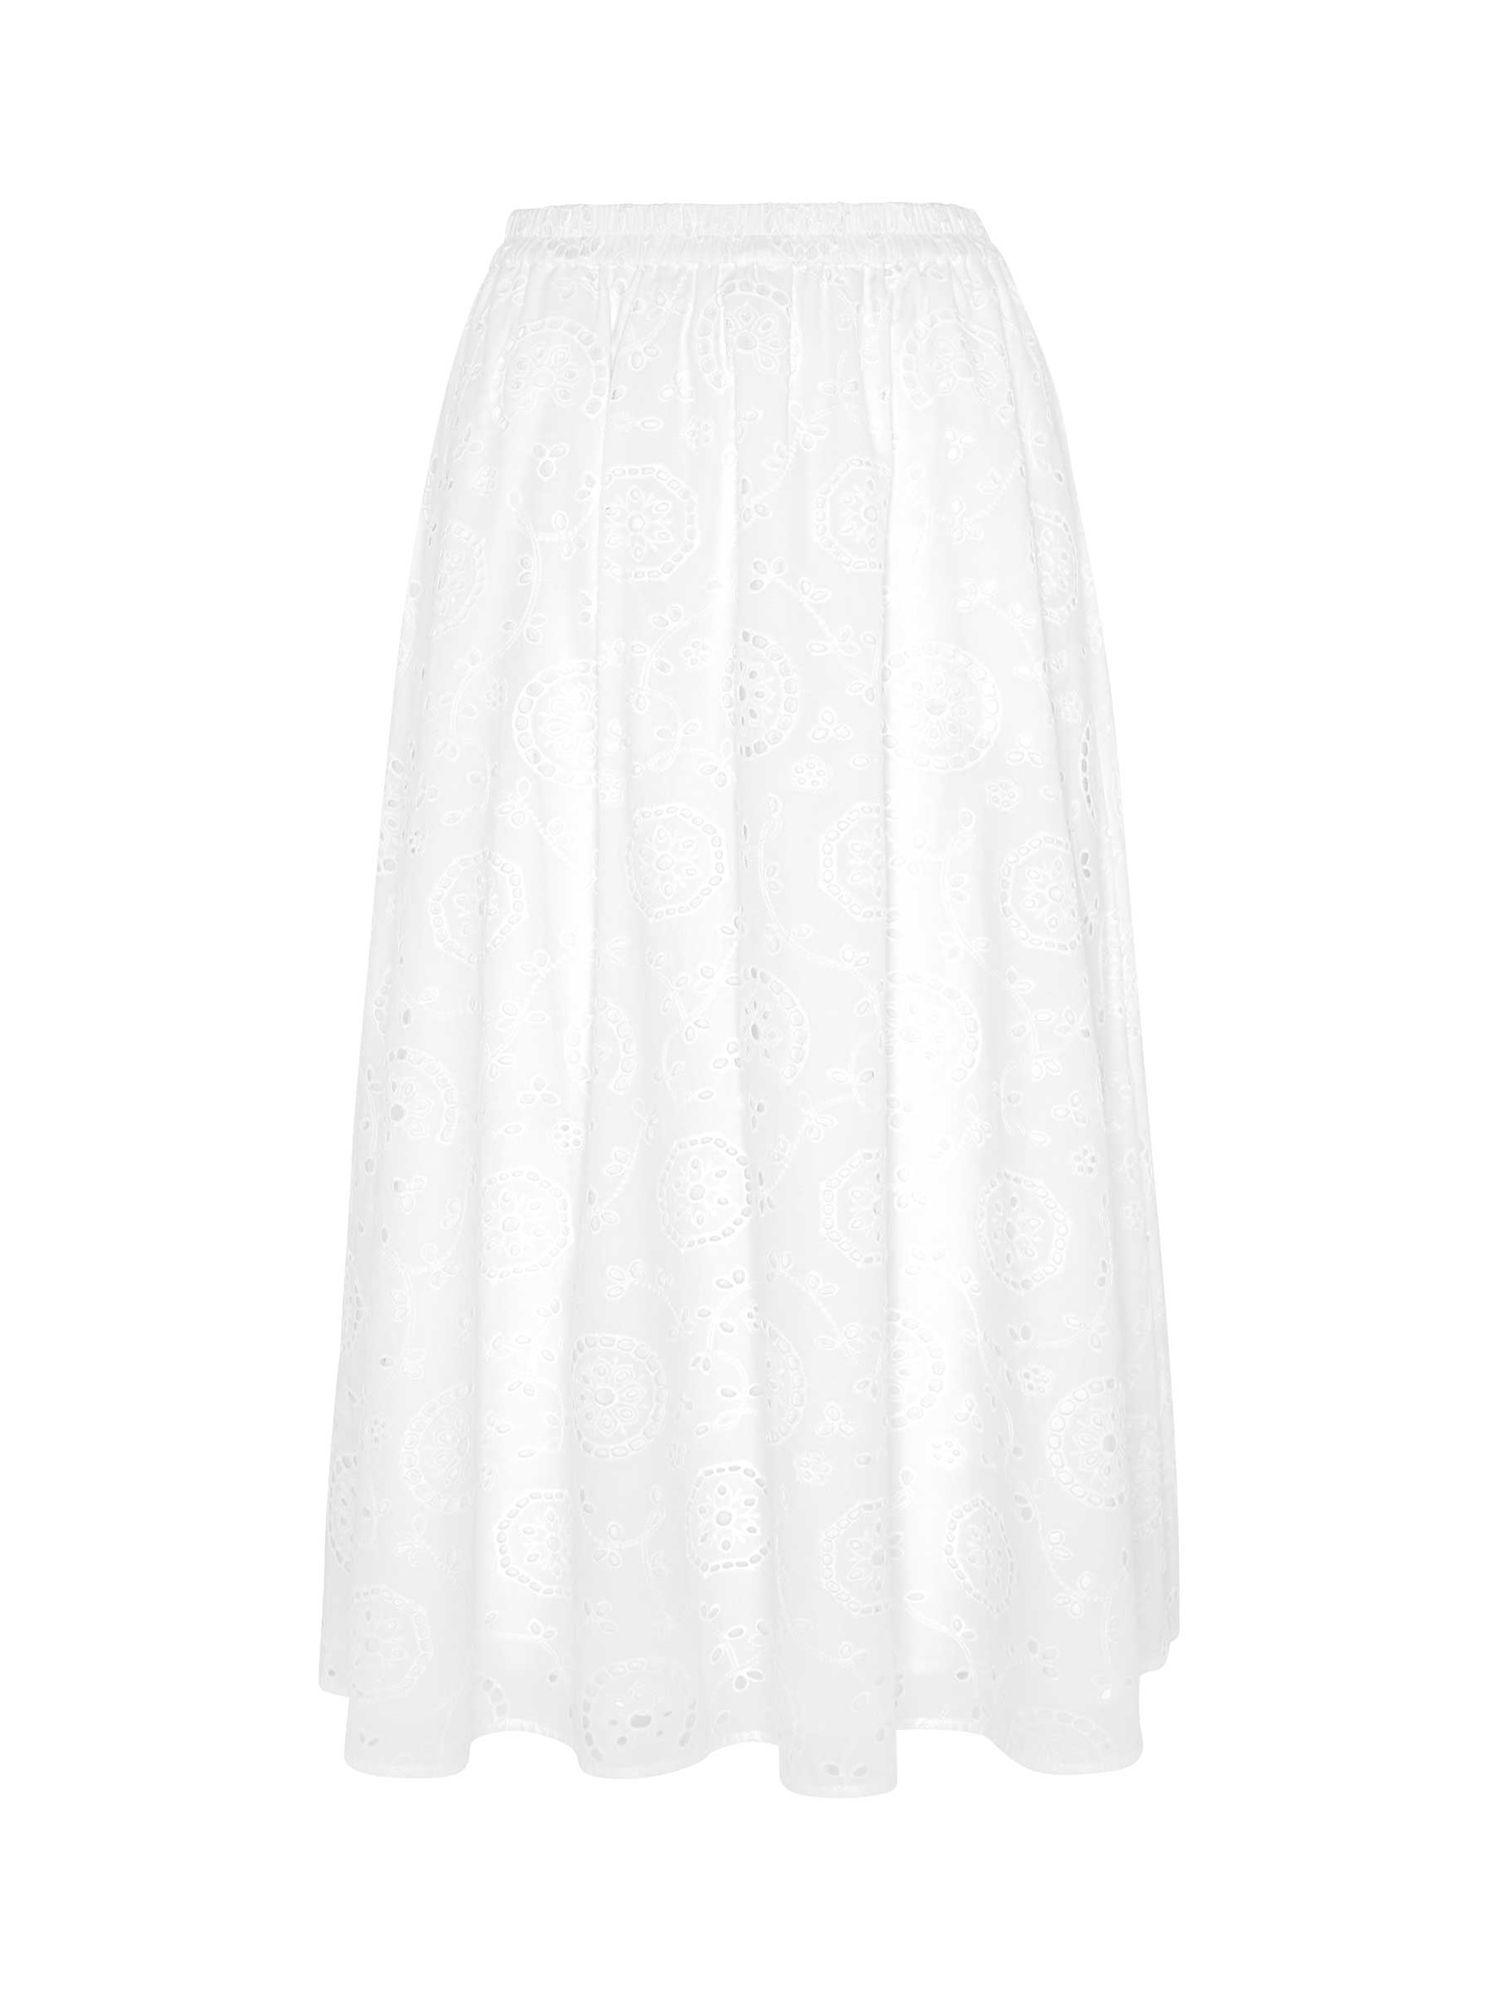 Vivere By Savannah Miller Valentina Broderie Anglaise Midi Skirt, White, 6